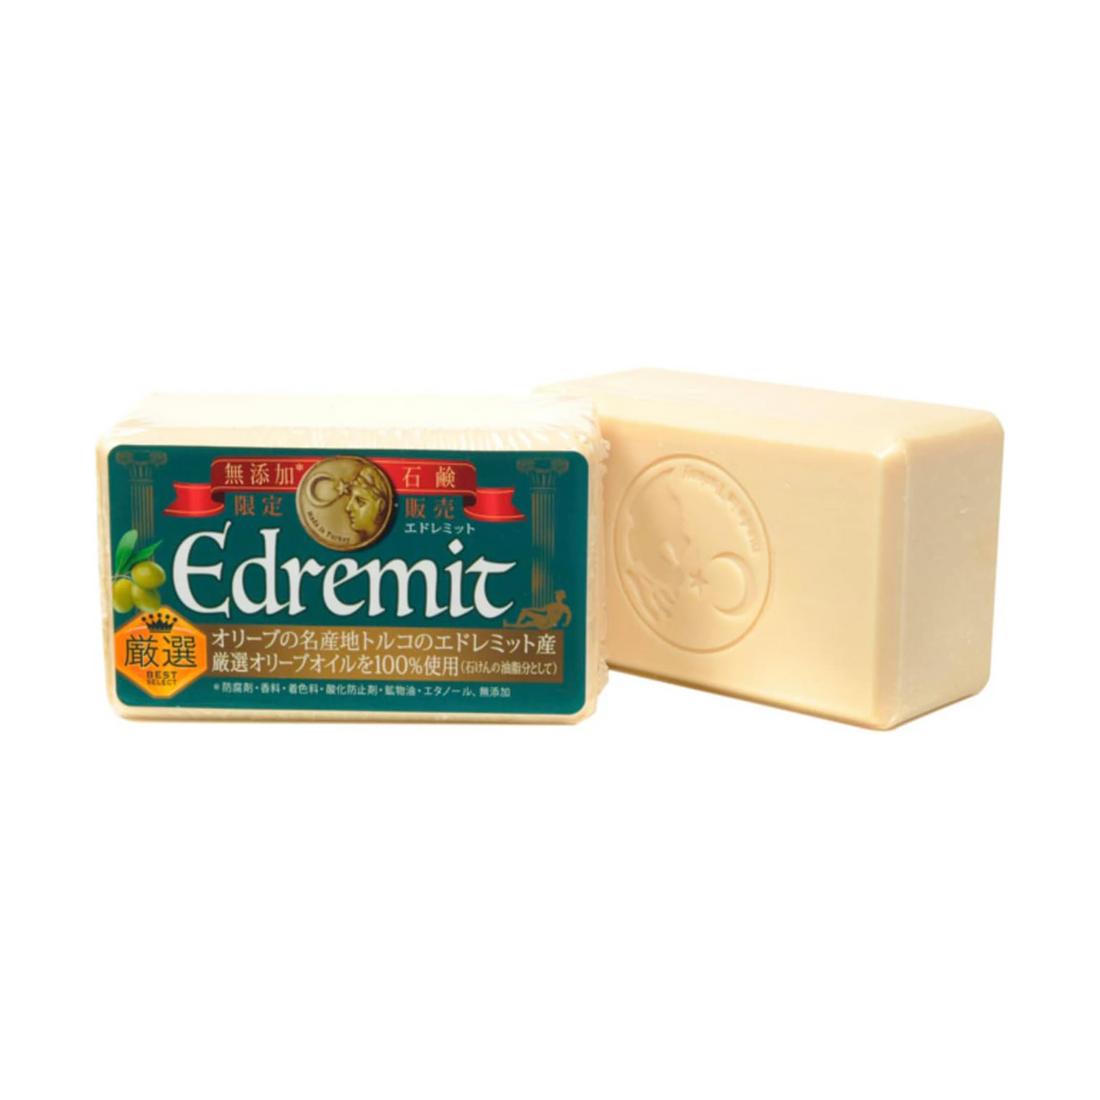 Edremit Additive-free Olive Soap 180g | Edremit Katkisiz Zeytin Sabunu 